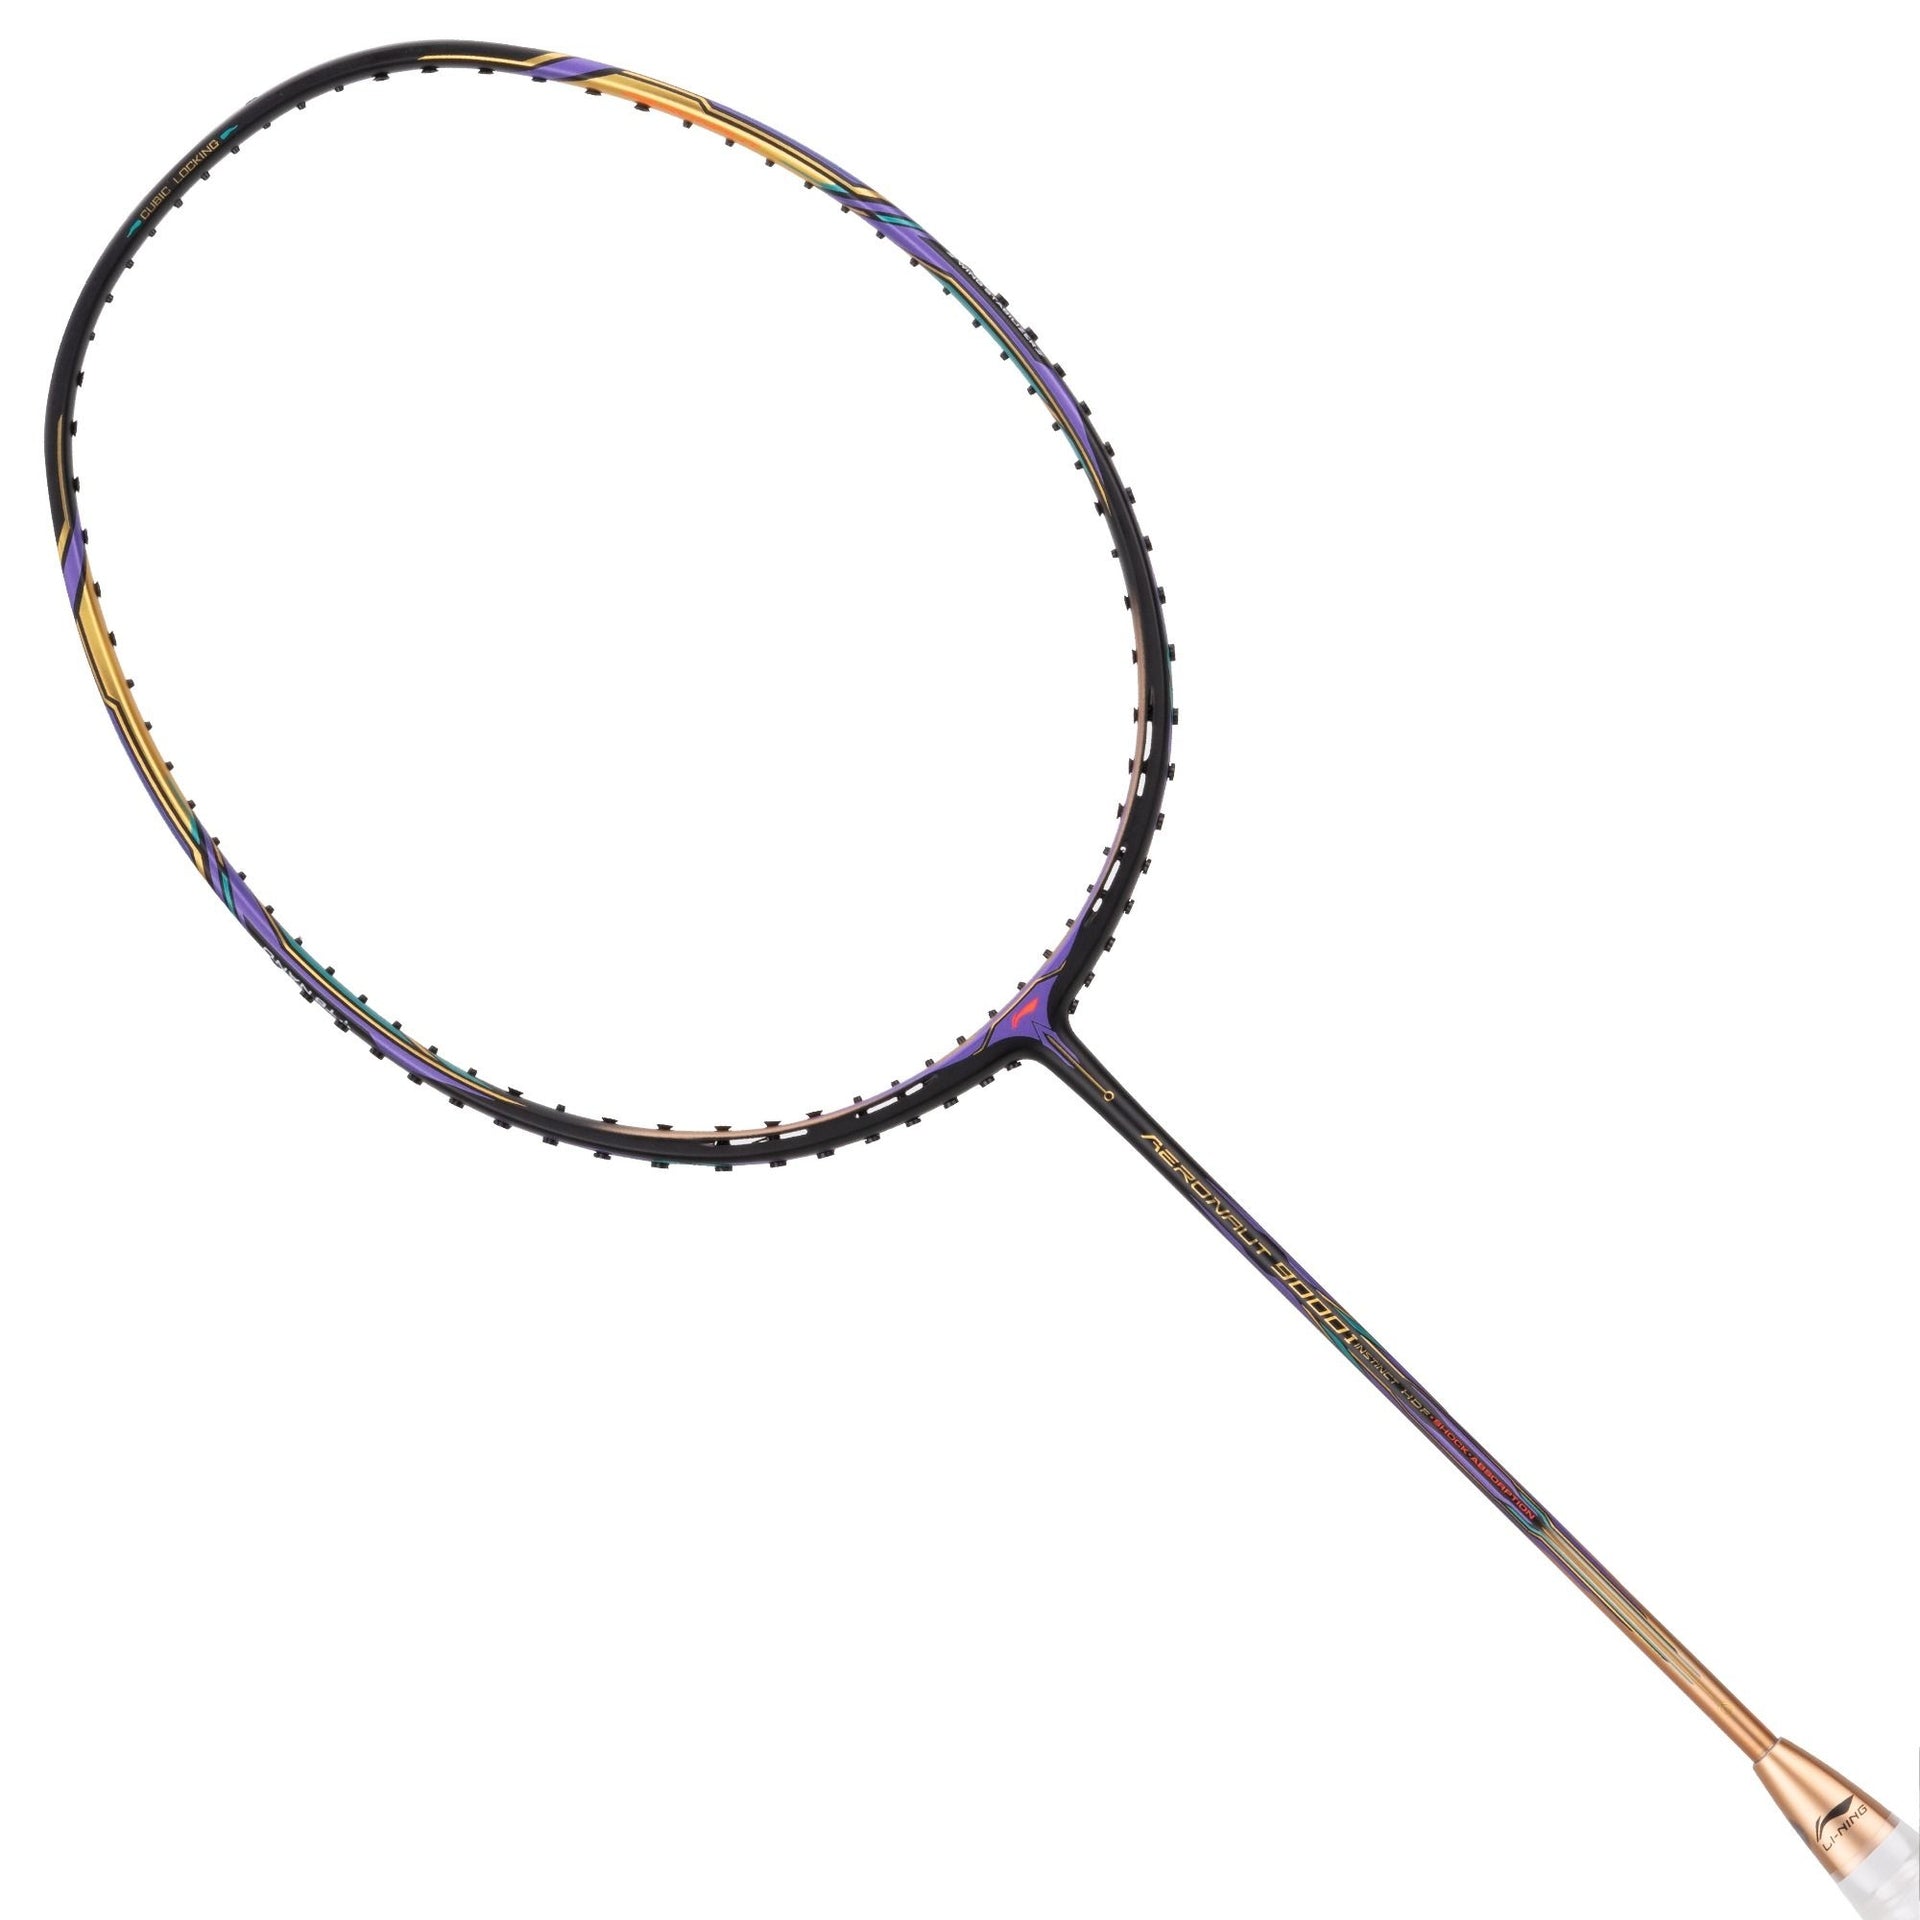 Best Badminton Rackets under 5000